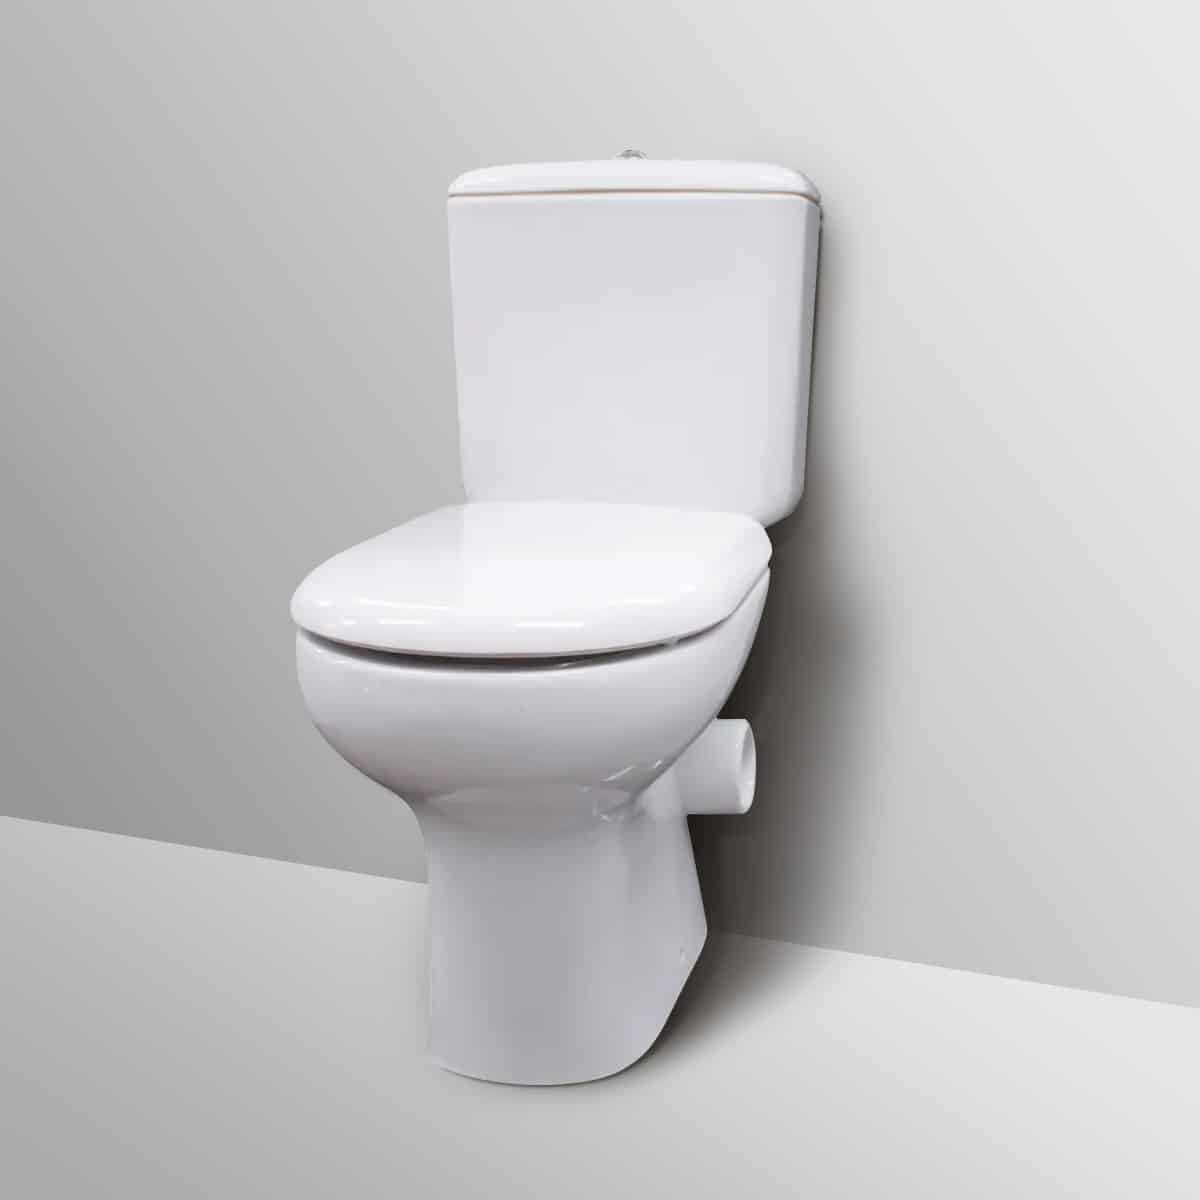 Fienza RAK Liwa White Close-Coupled Toilet Suite Right Hand Skew Trap